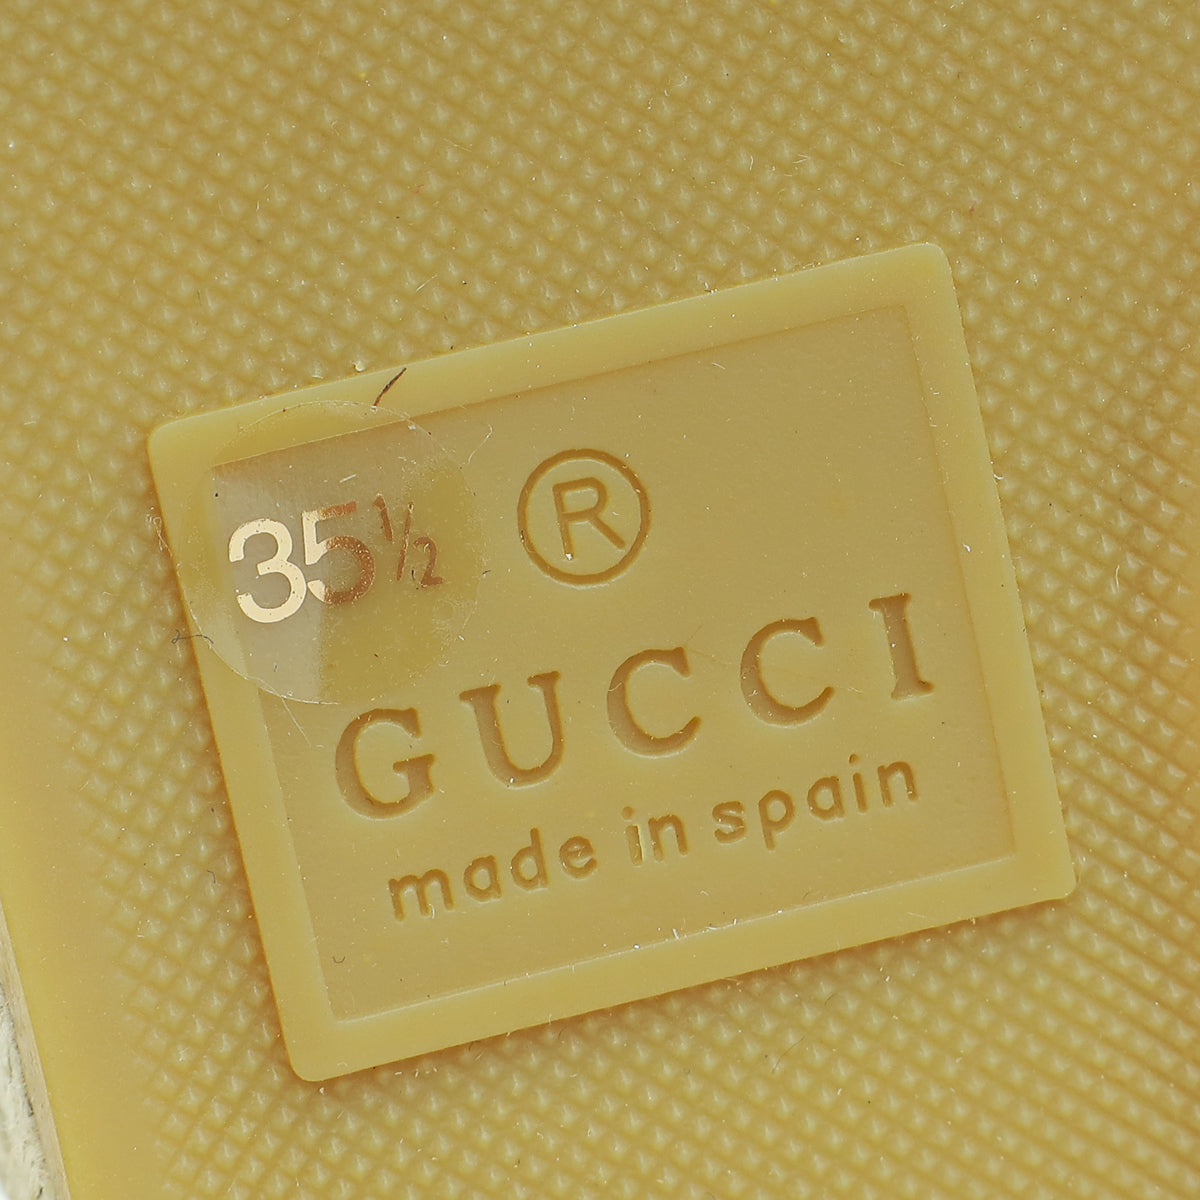 Gucci Black GG Marmont Espadrille Slide Sandals 35.5